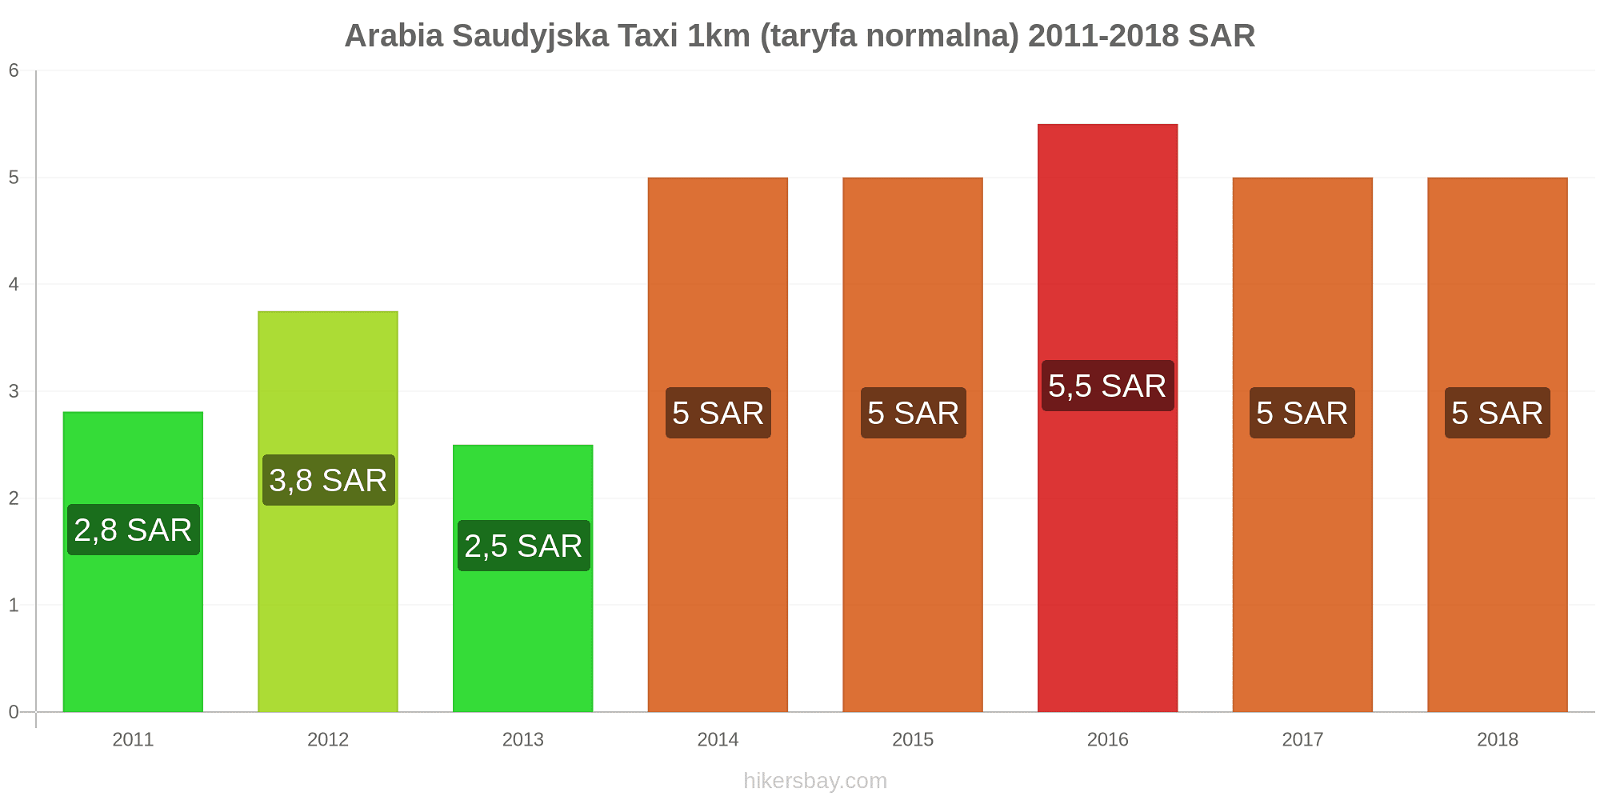 Arabia Saudyjska zmiany cen Taxi 1km (taryfa normalna) hikersbay.com